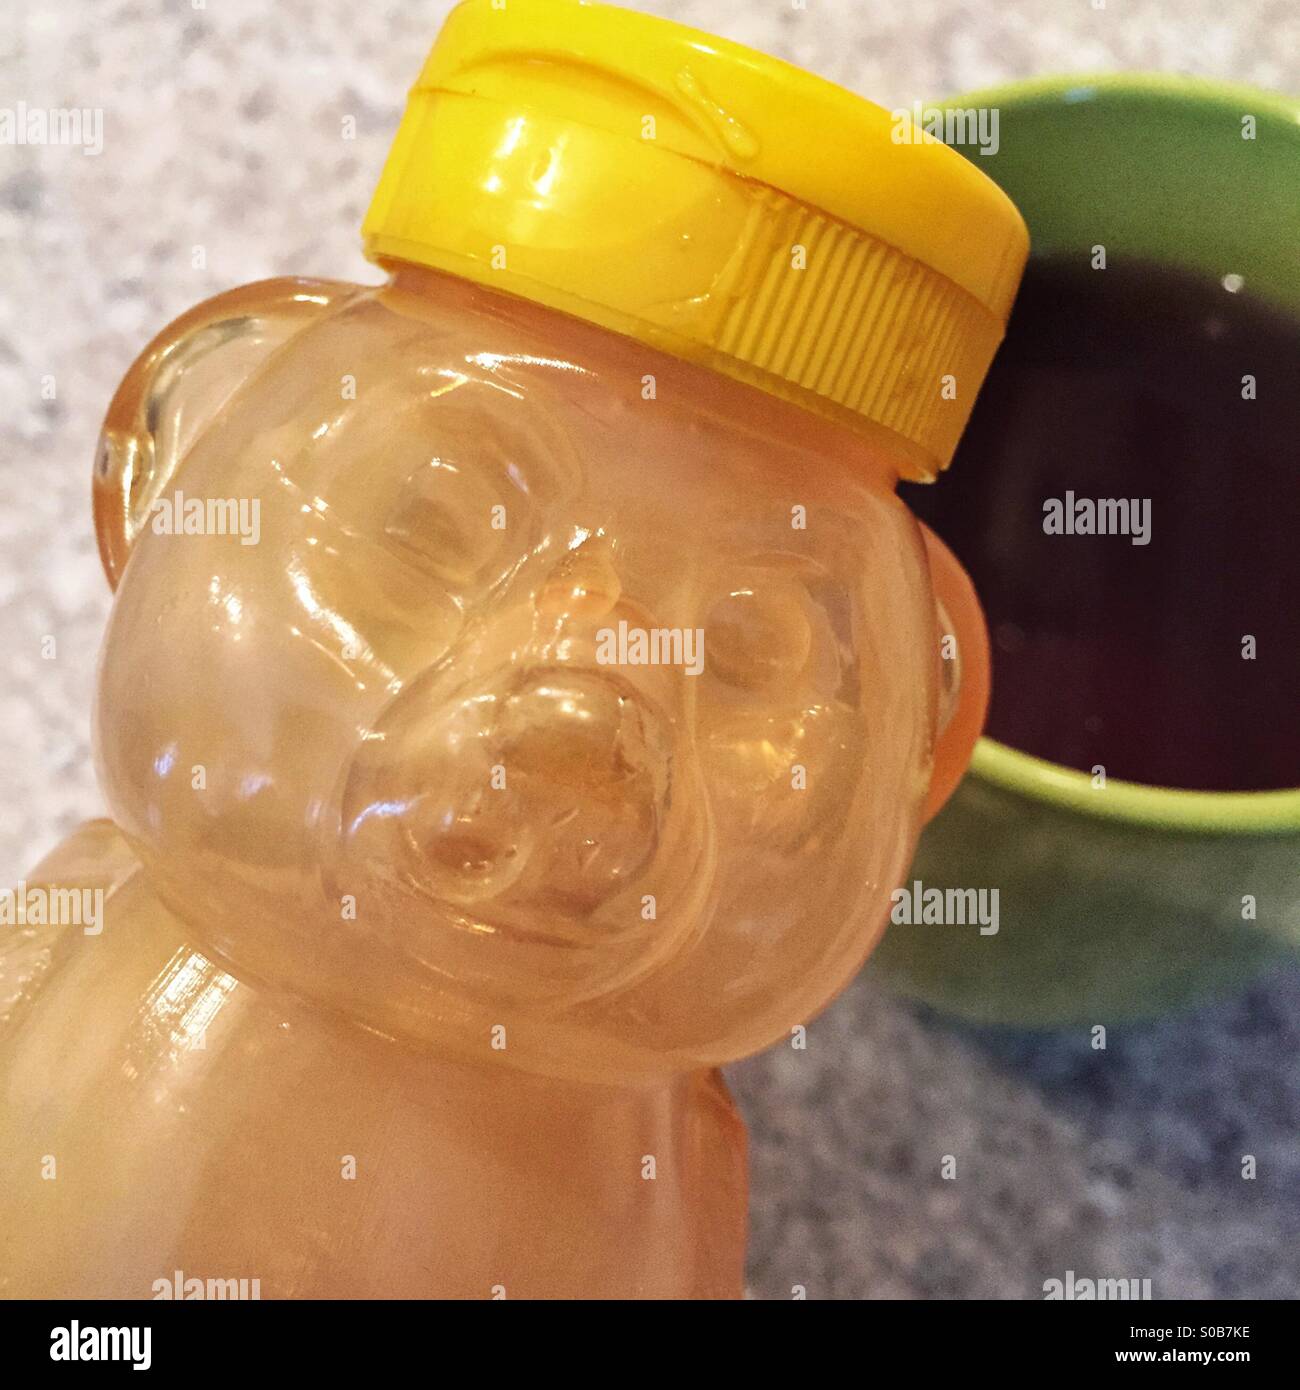 Honey bear bottle of liquid honey alongside a cup of herbal tea. Stock Photo